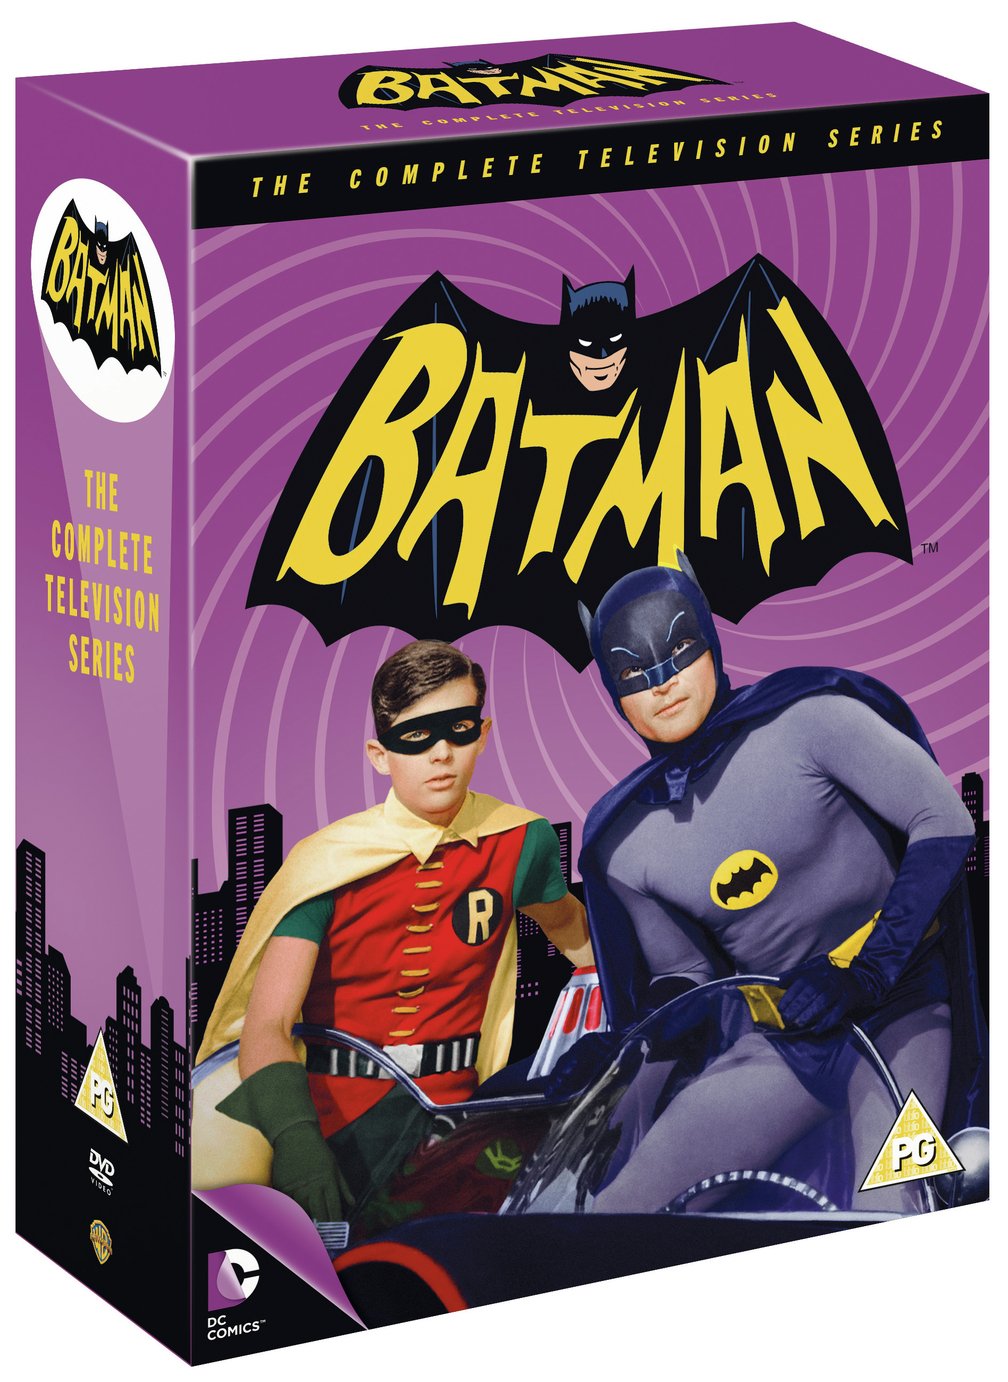 Batman: The Original Series DVD Box Set